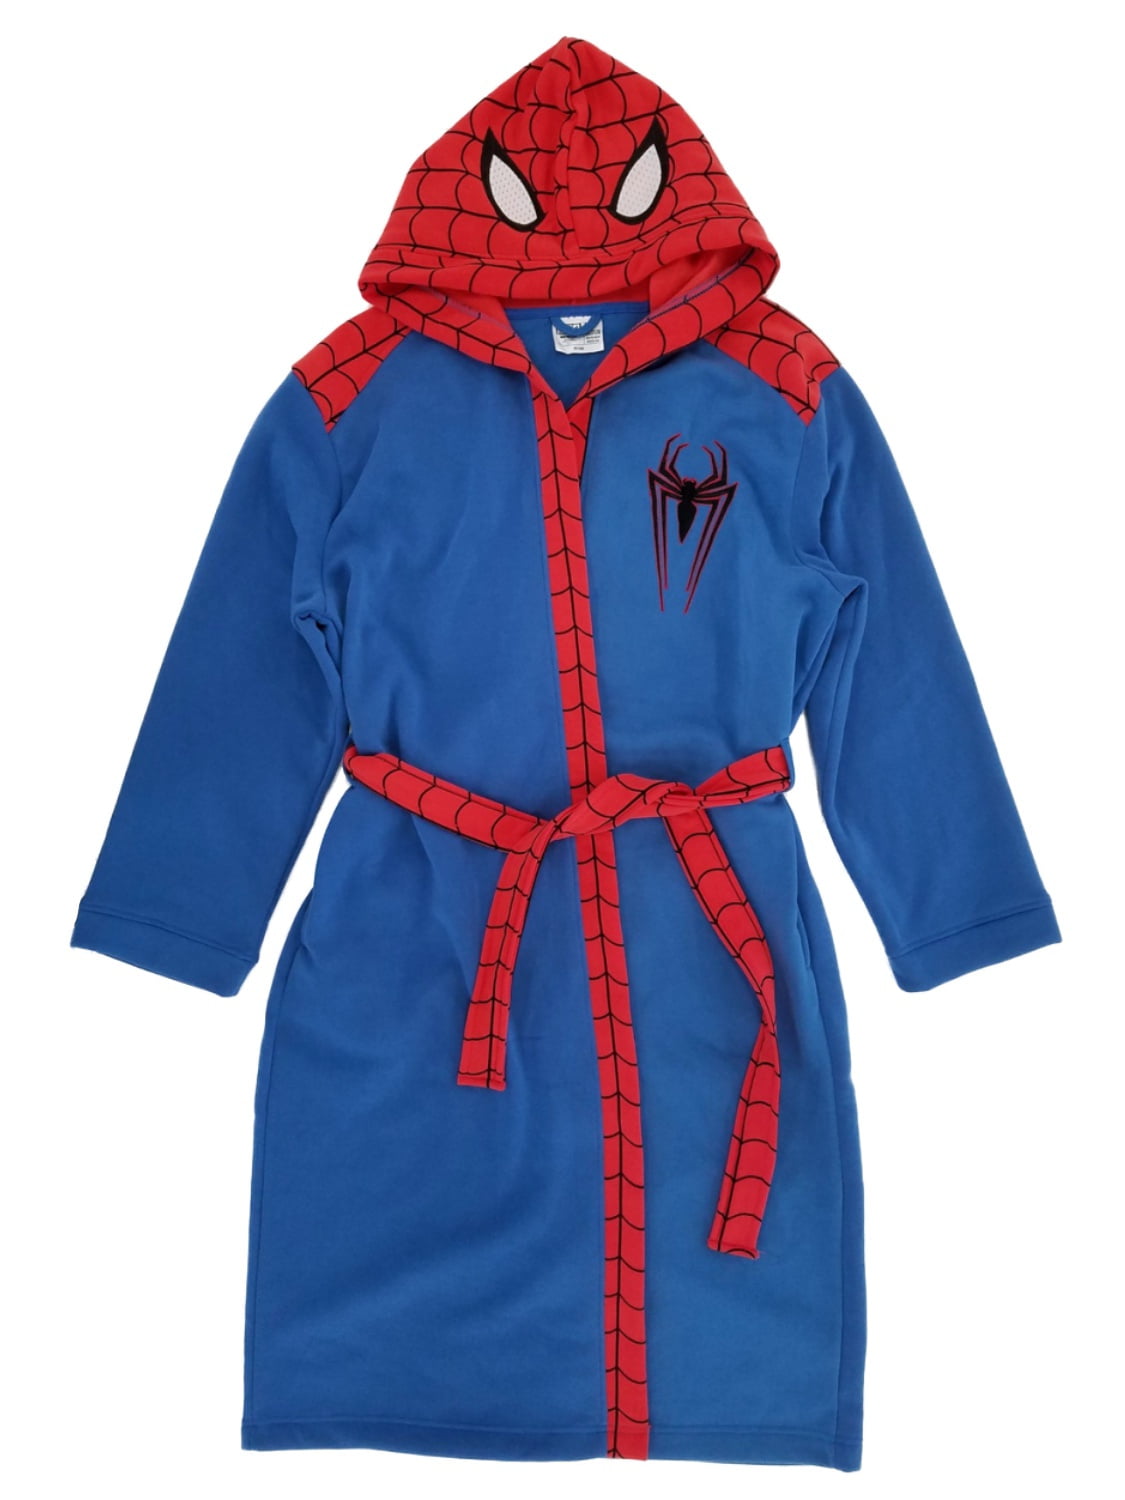 Marvel Spider-Man Dressing Gown Boys Kids Cosplay Pyjamas Robe 